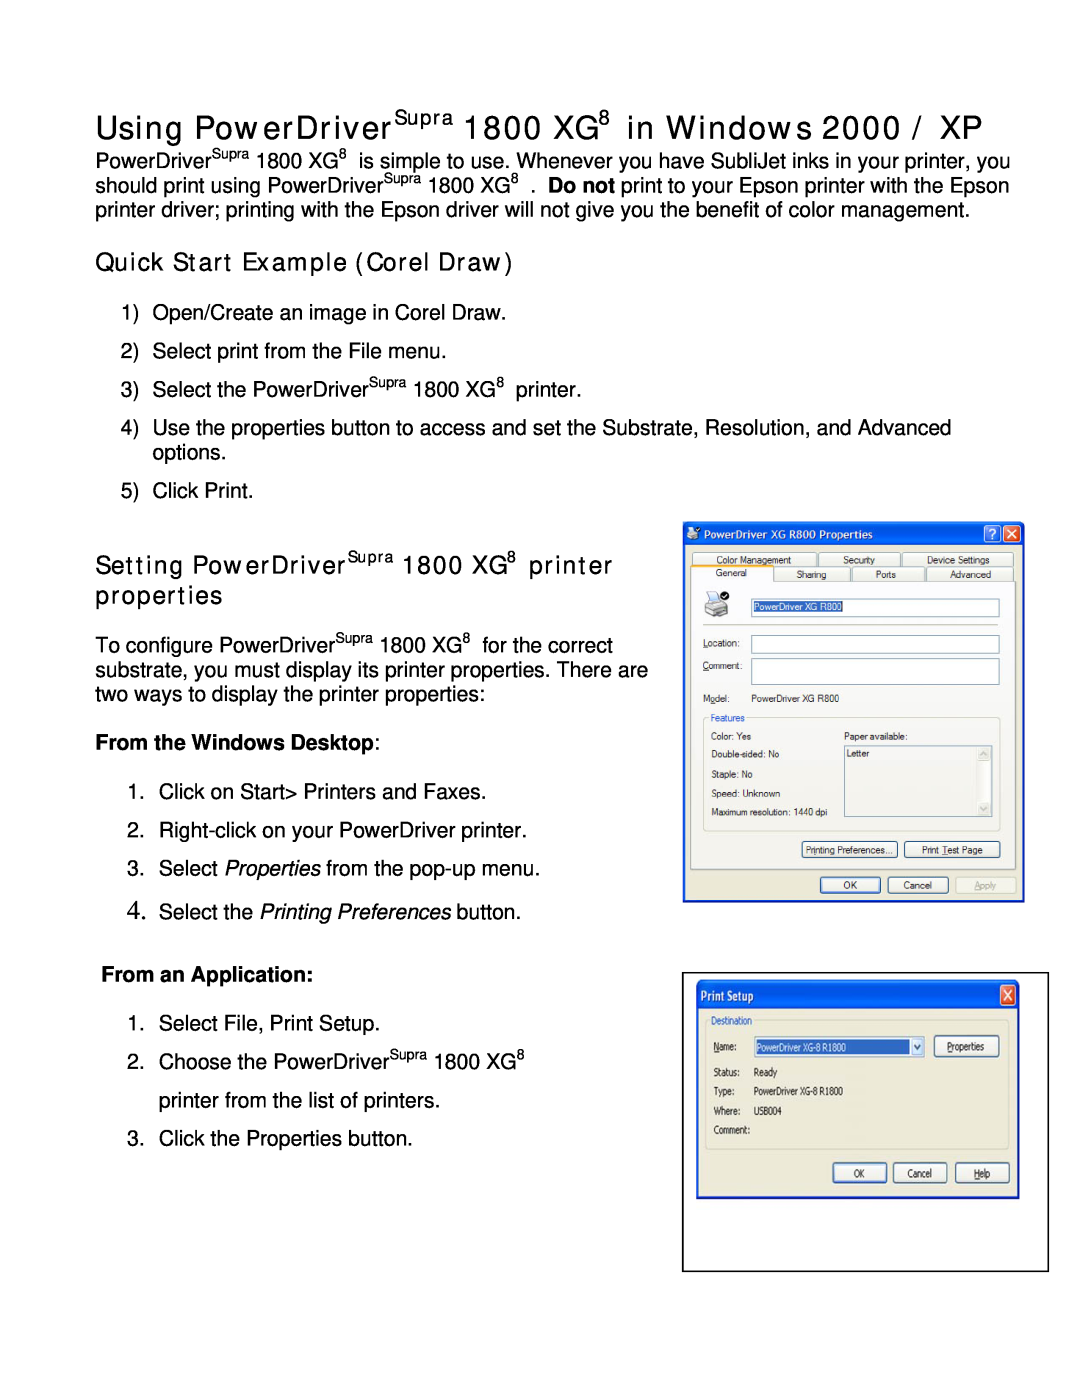 Epson R1800 Using PowerDriverSupra 1800 XG8 in Windows 2000 / XP, Quick Start Example Corel Draw, From the Windows Desktop 